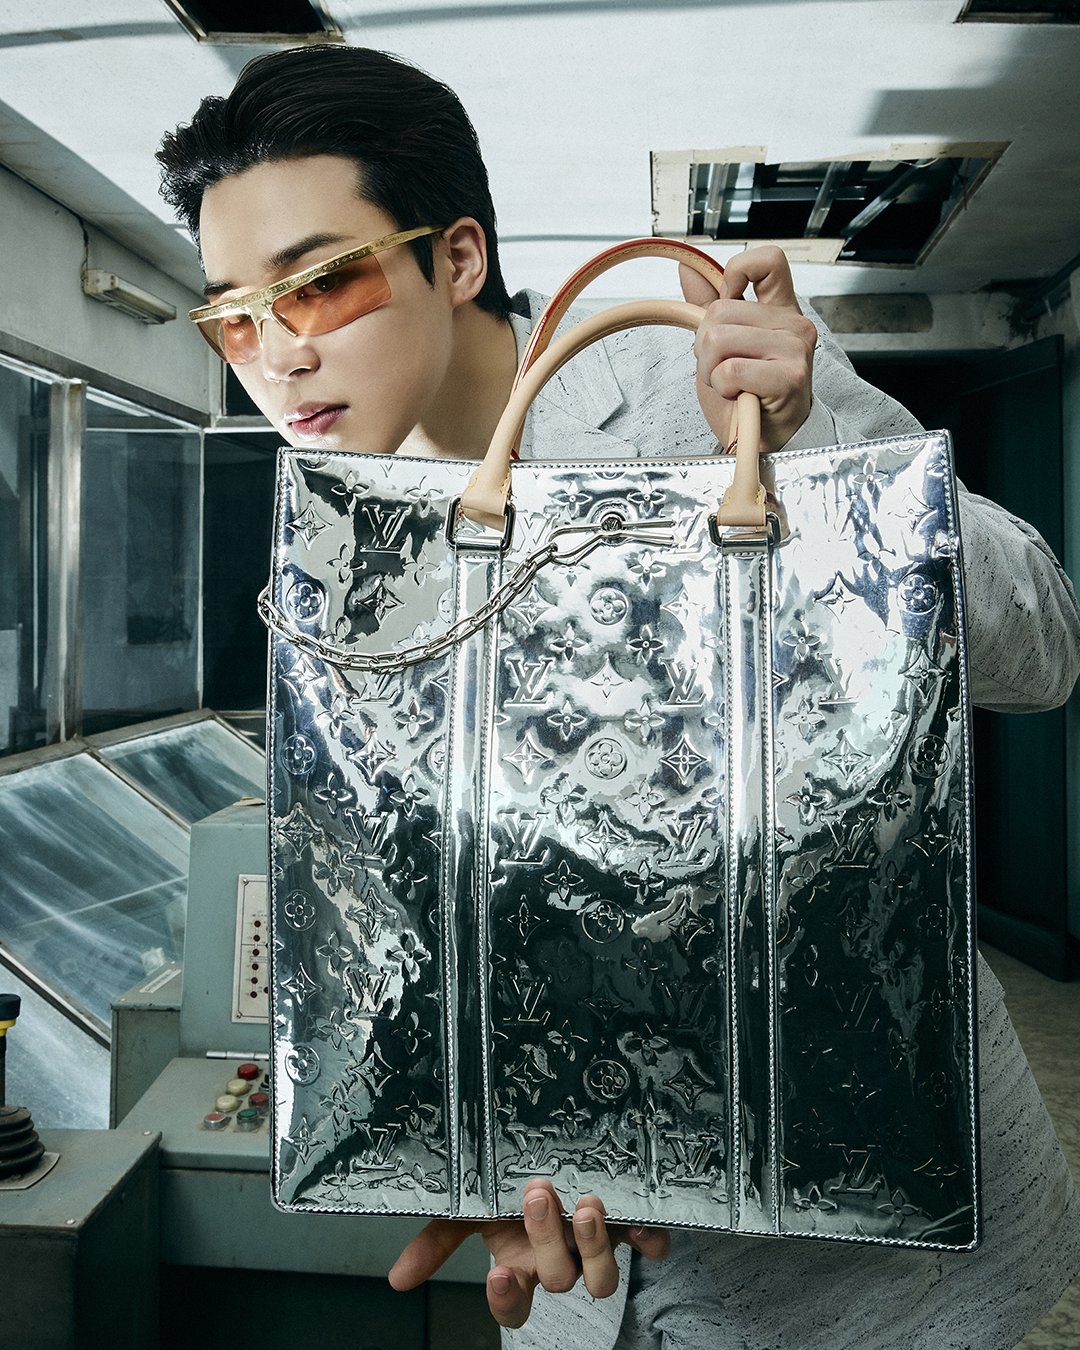 BTS' Jimin is shining both as a Louis Vuitton and FILA brand ambassador